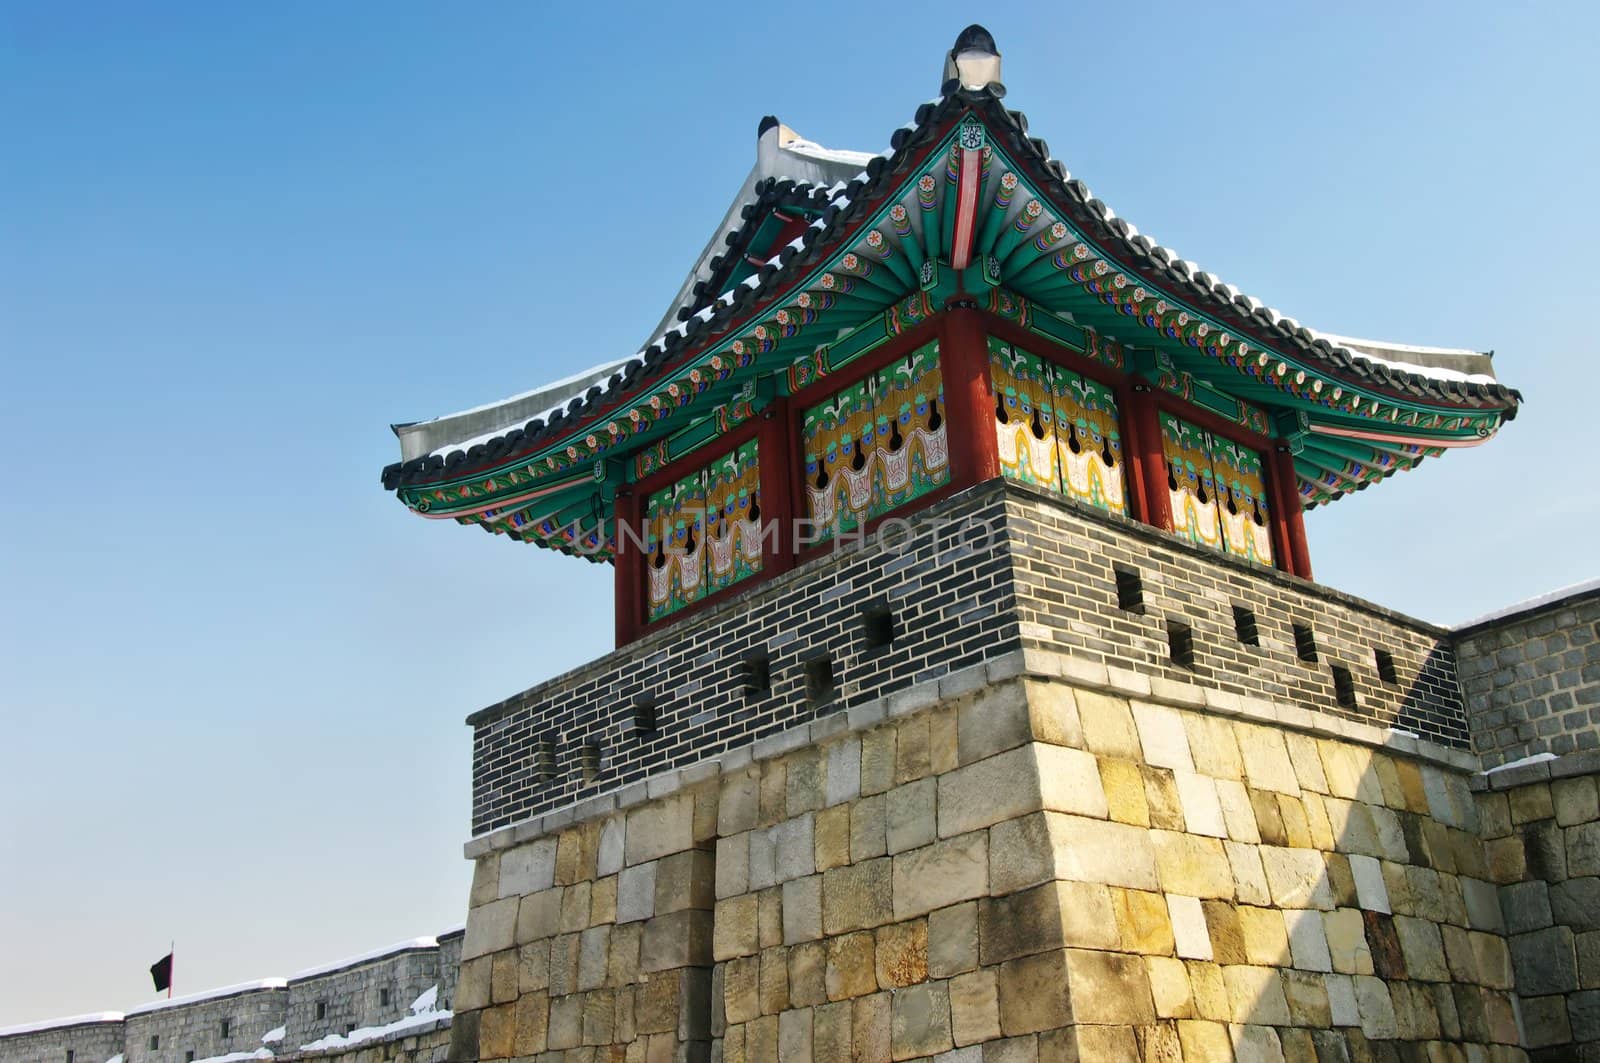 Korean Sentry Post by clickbeetle